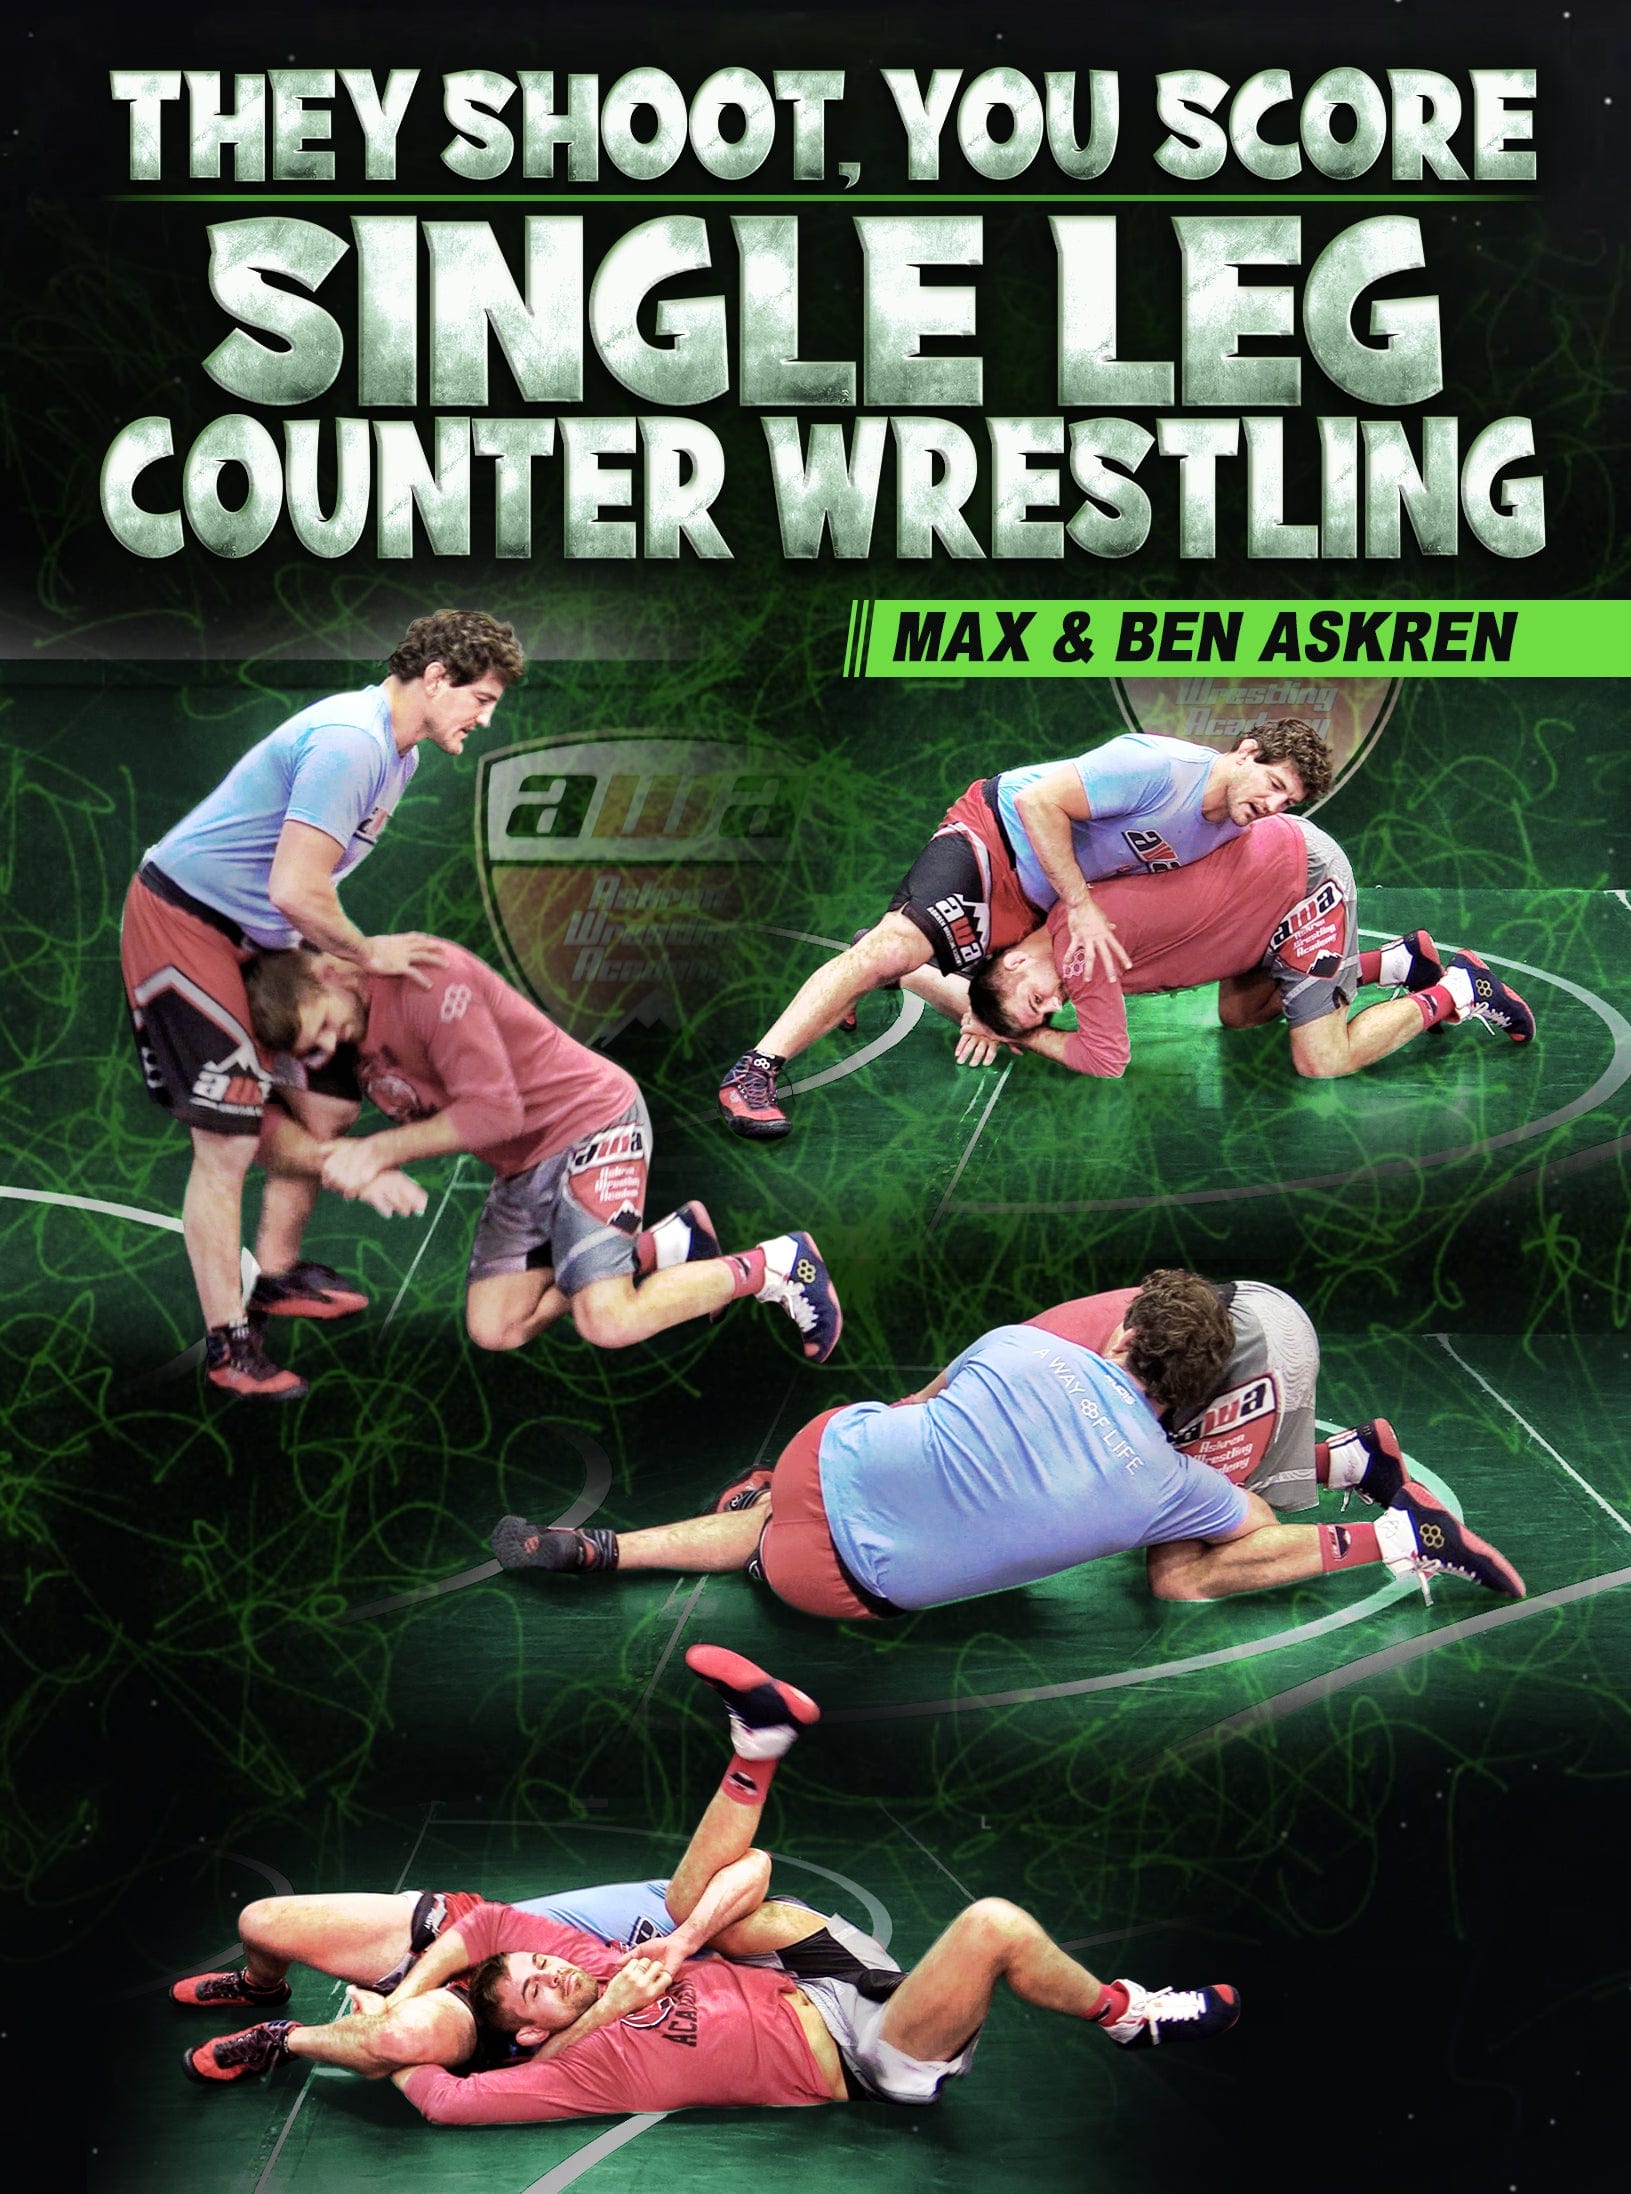 They Shoot, You Score: Single Leg Counter Wrestling by Max & Ben Askren - Fanatic Wrestling